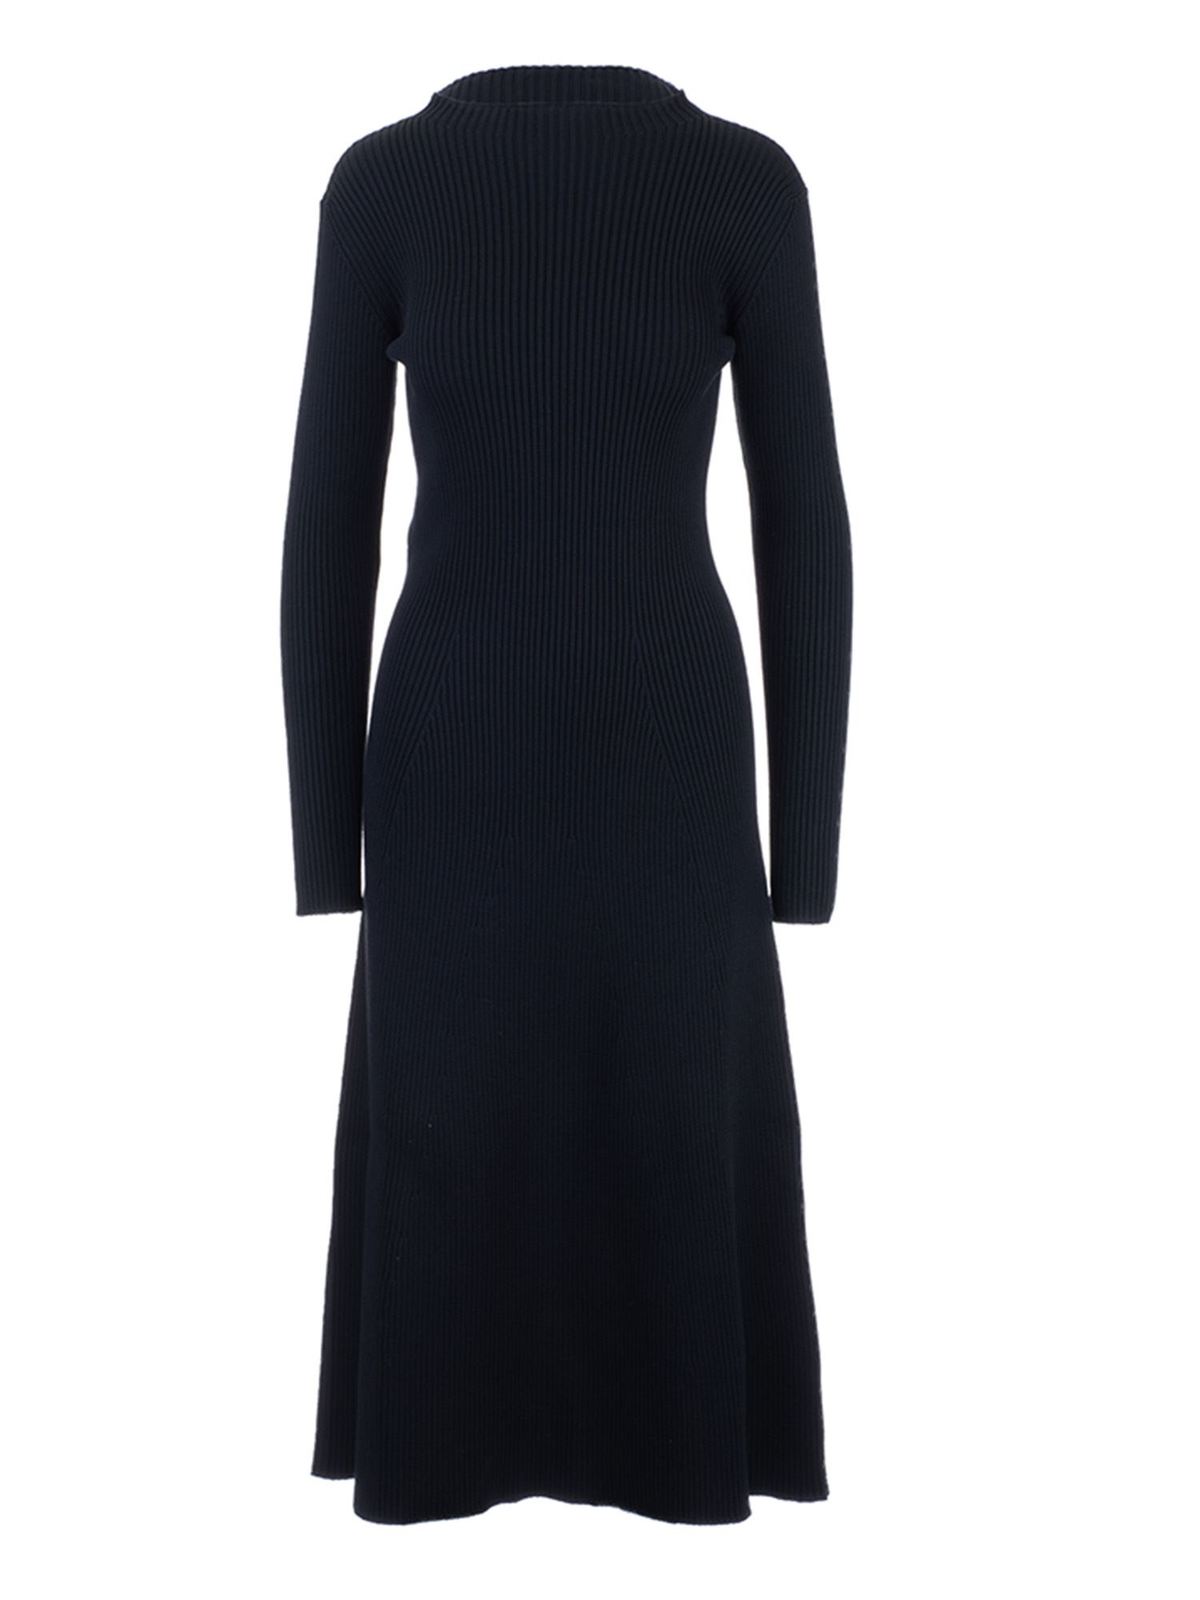 Prada - Ribbed dress in black - maxi dresses - 238302NERF0002 | iKRIX.com